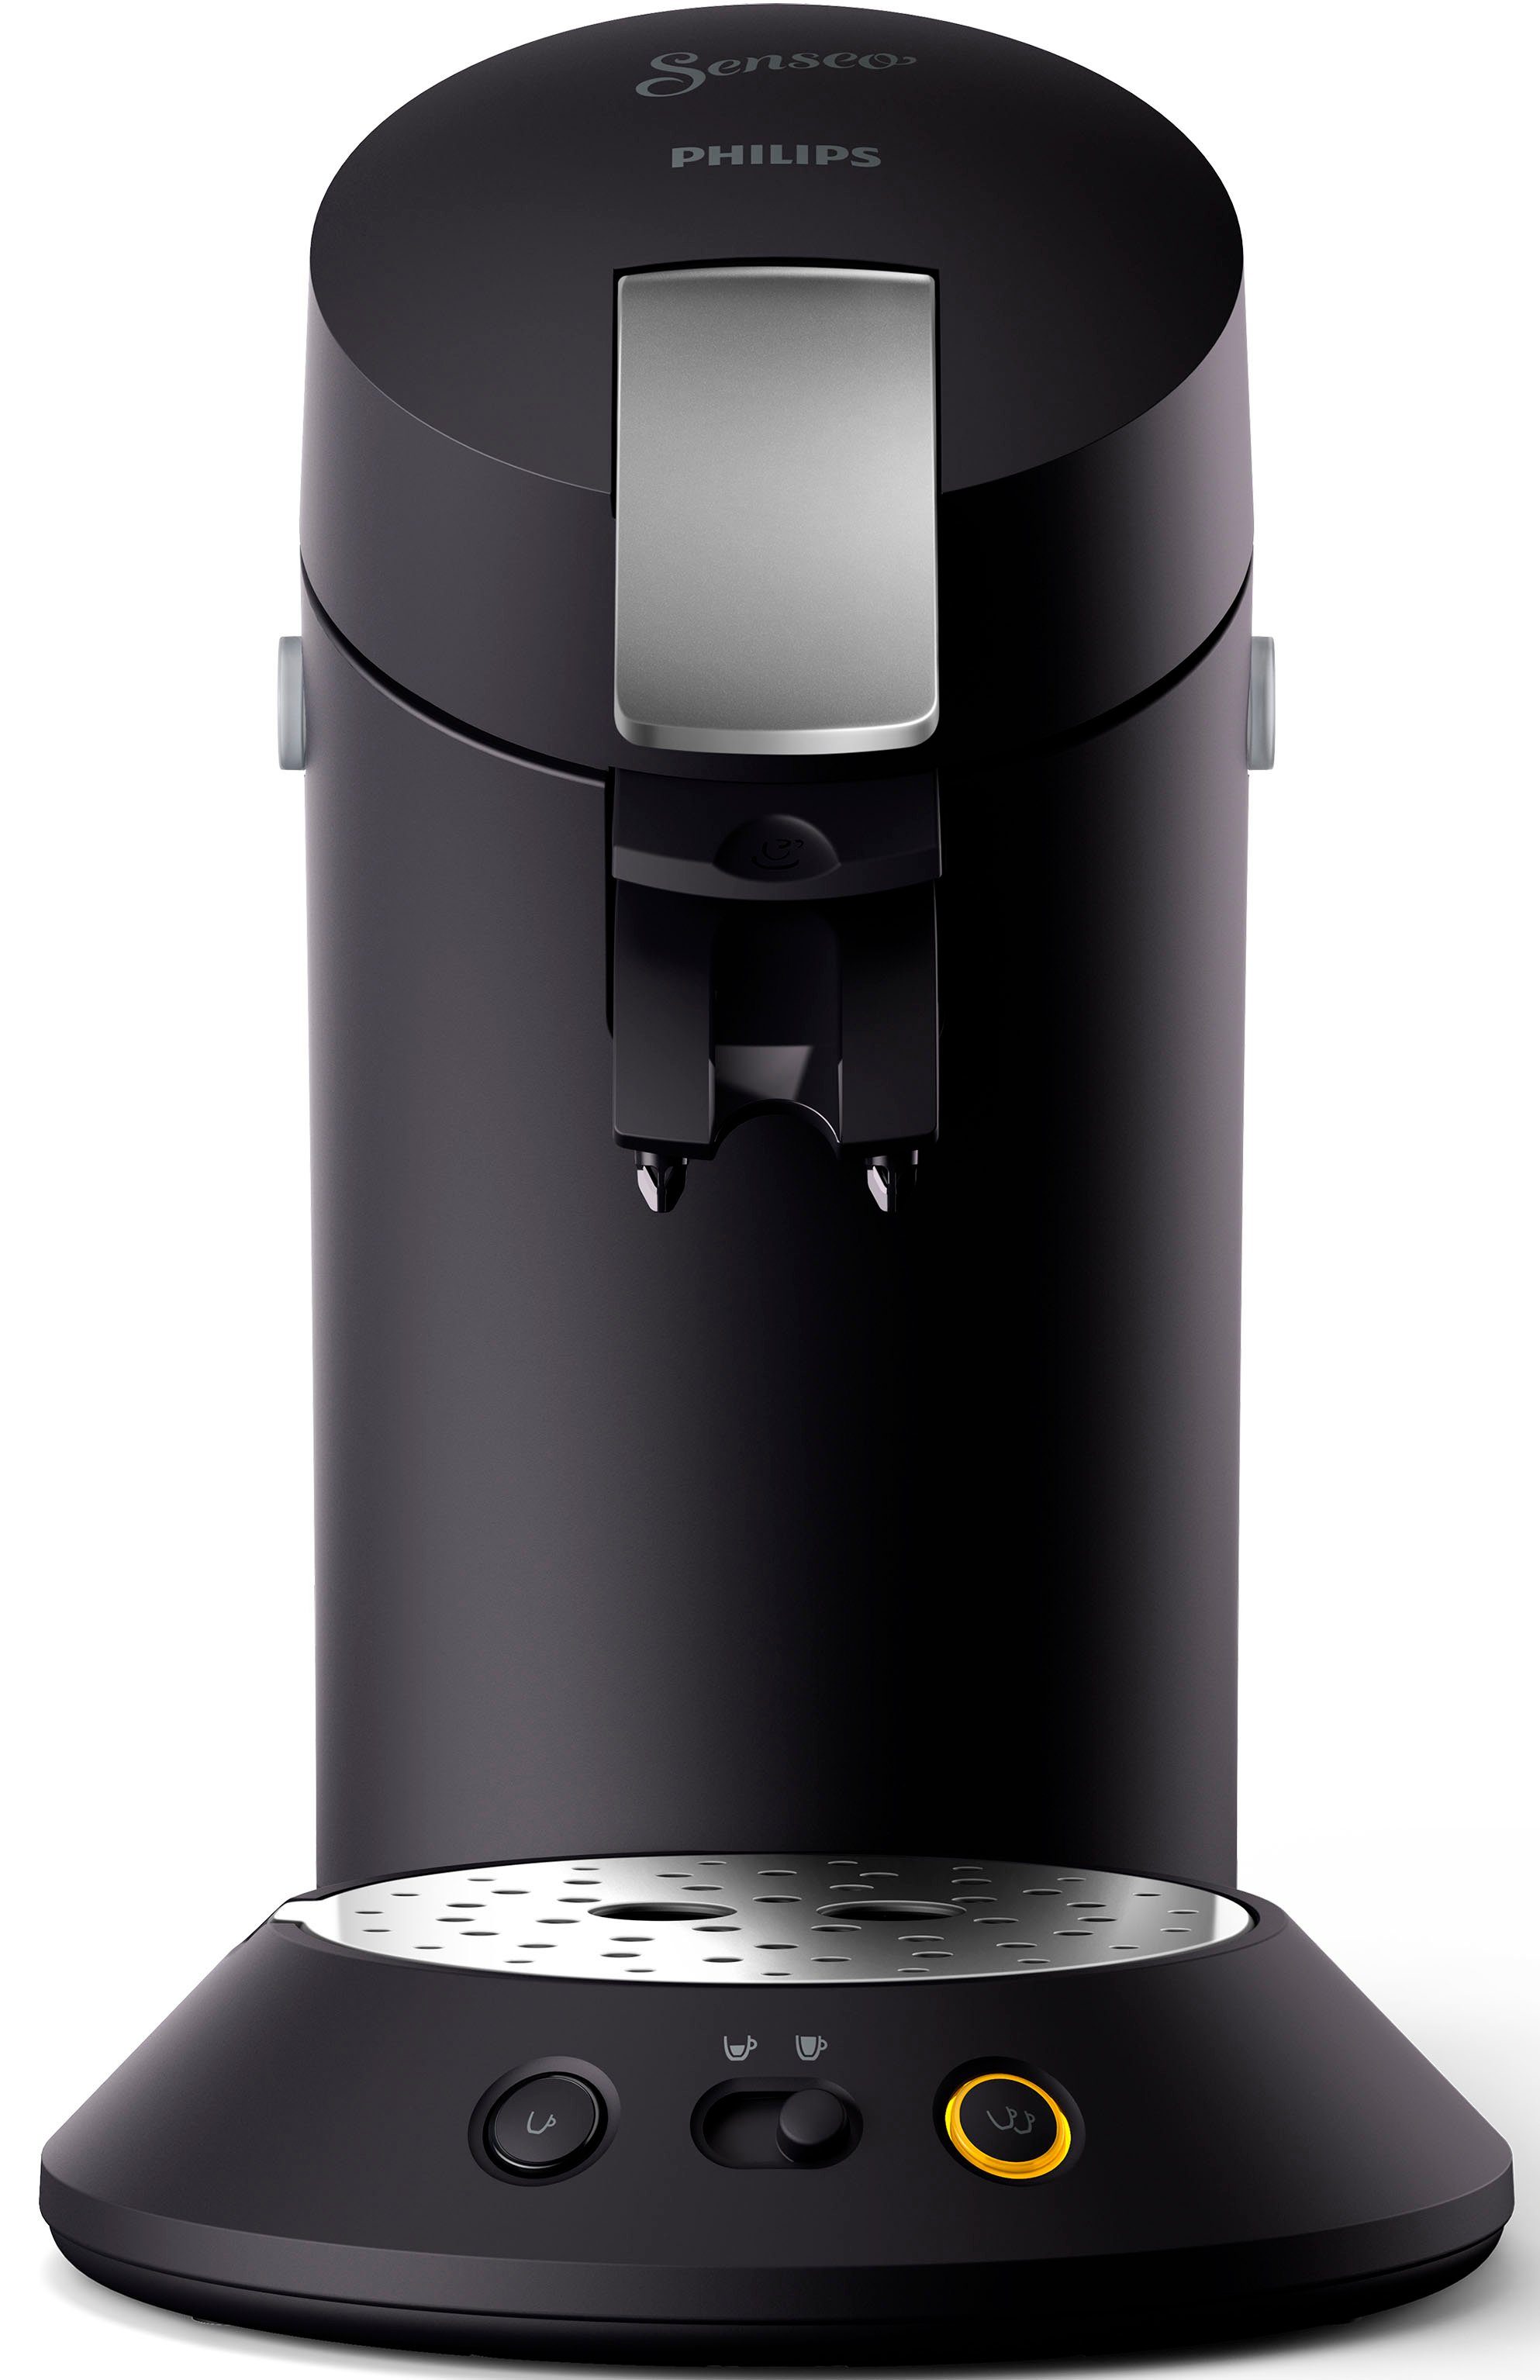 Senseo CSA220/69 Original Plus Philips Senseo Kaffeepadmaschine